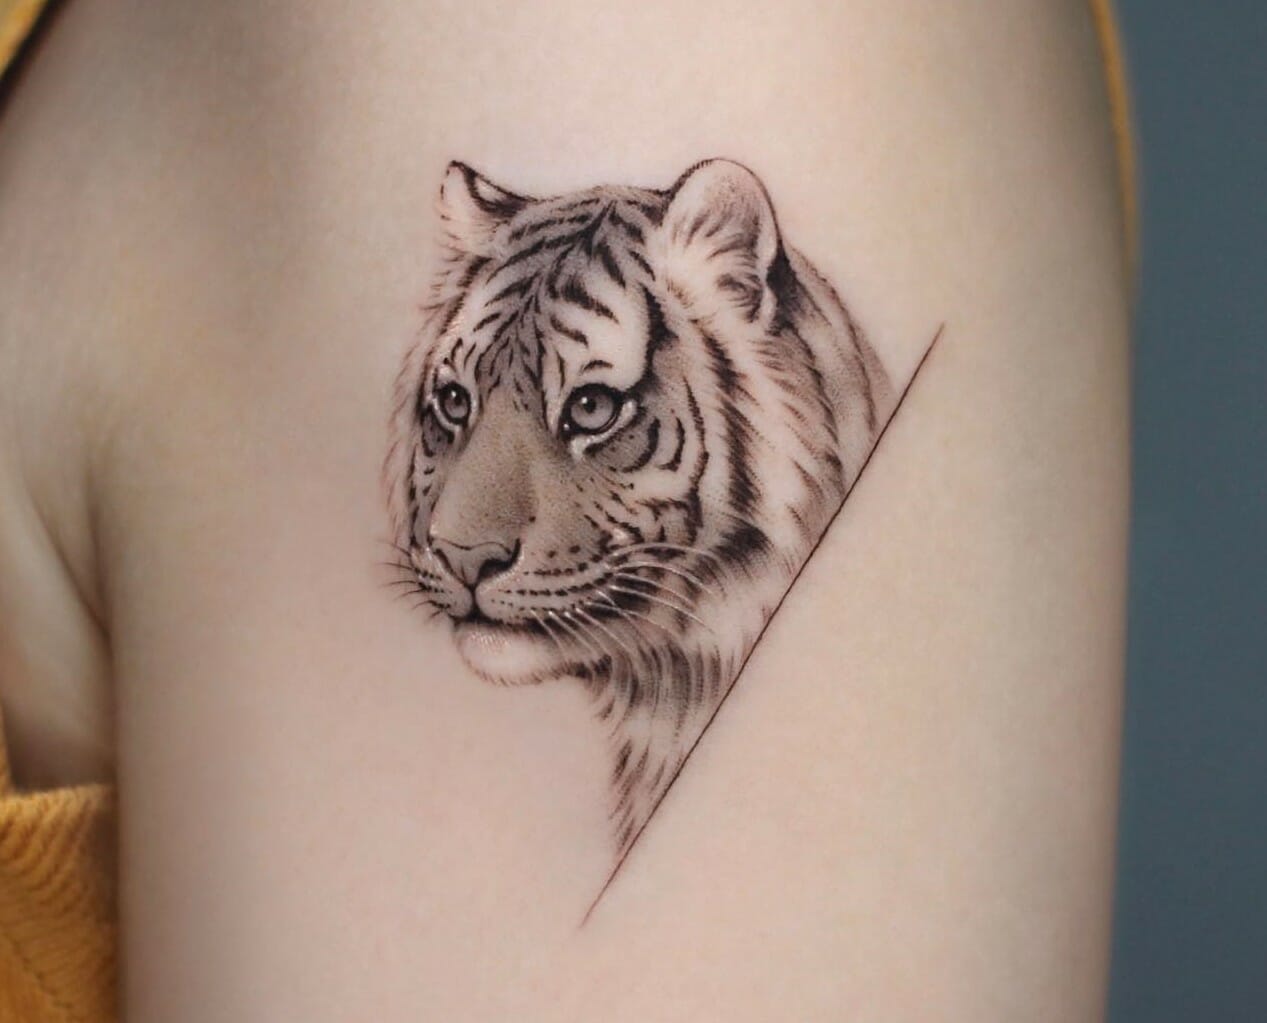 Cute Tiger Temporary Tattoos - Watercolor Tattoo Sticker Body Art Tattoos  10pcs | eBay